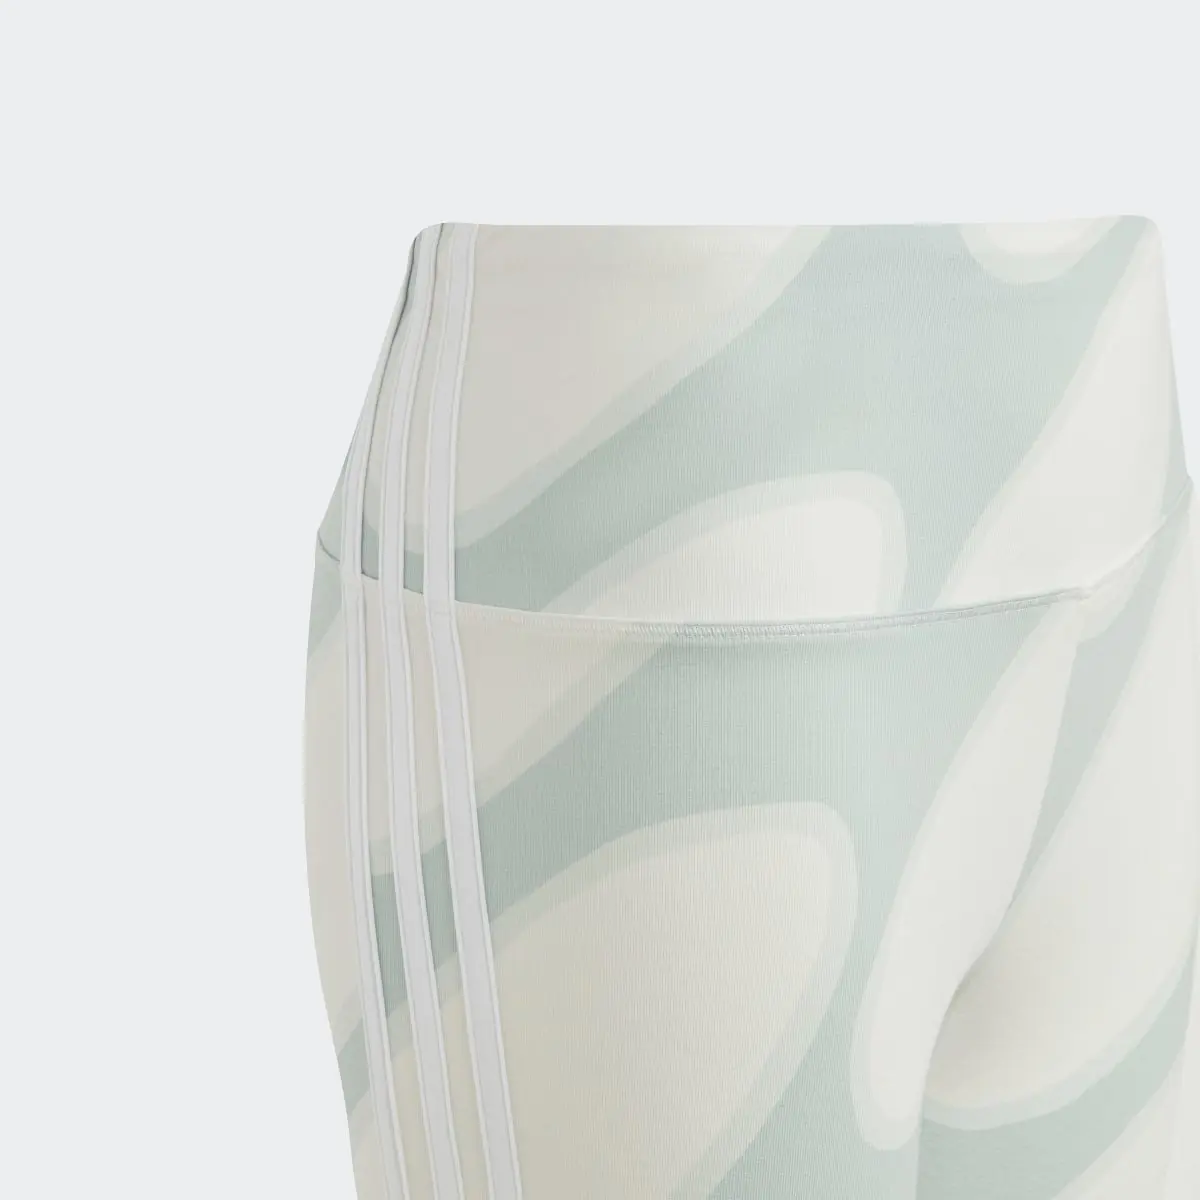 Adidas x Marimekko Allover Print Cotton Tights. 3